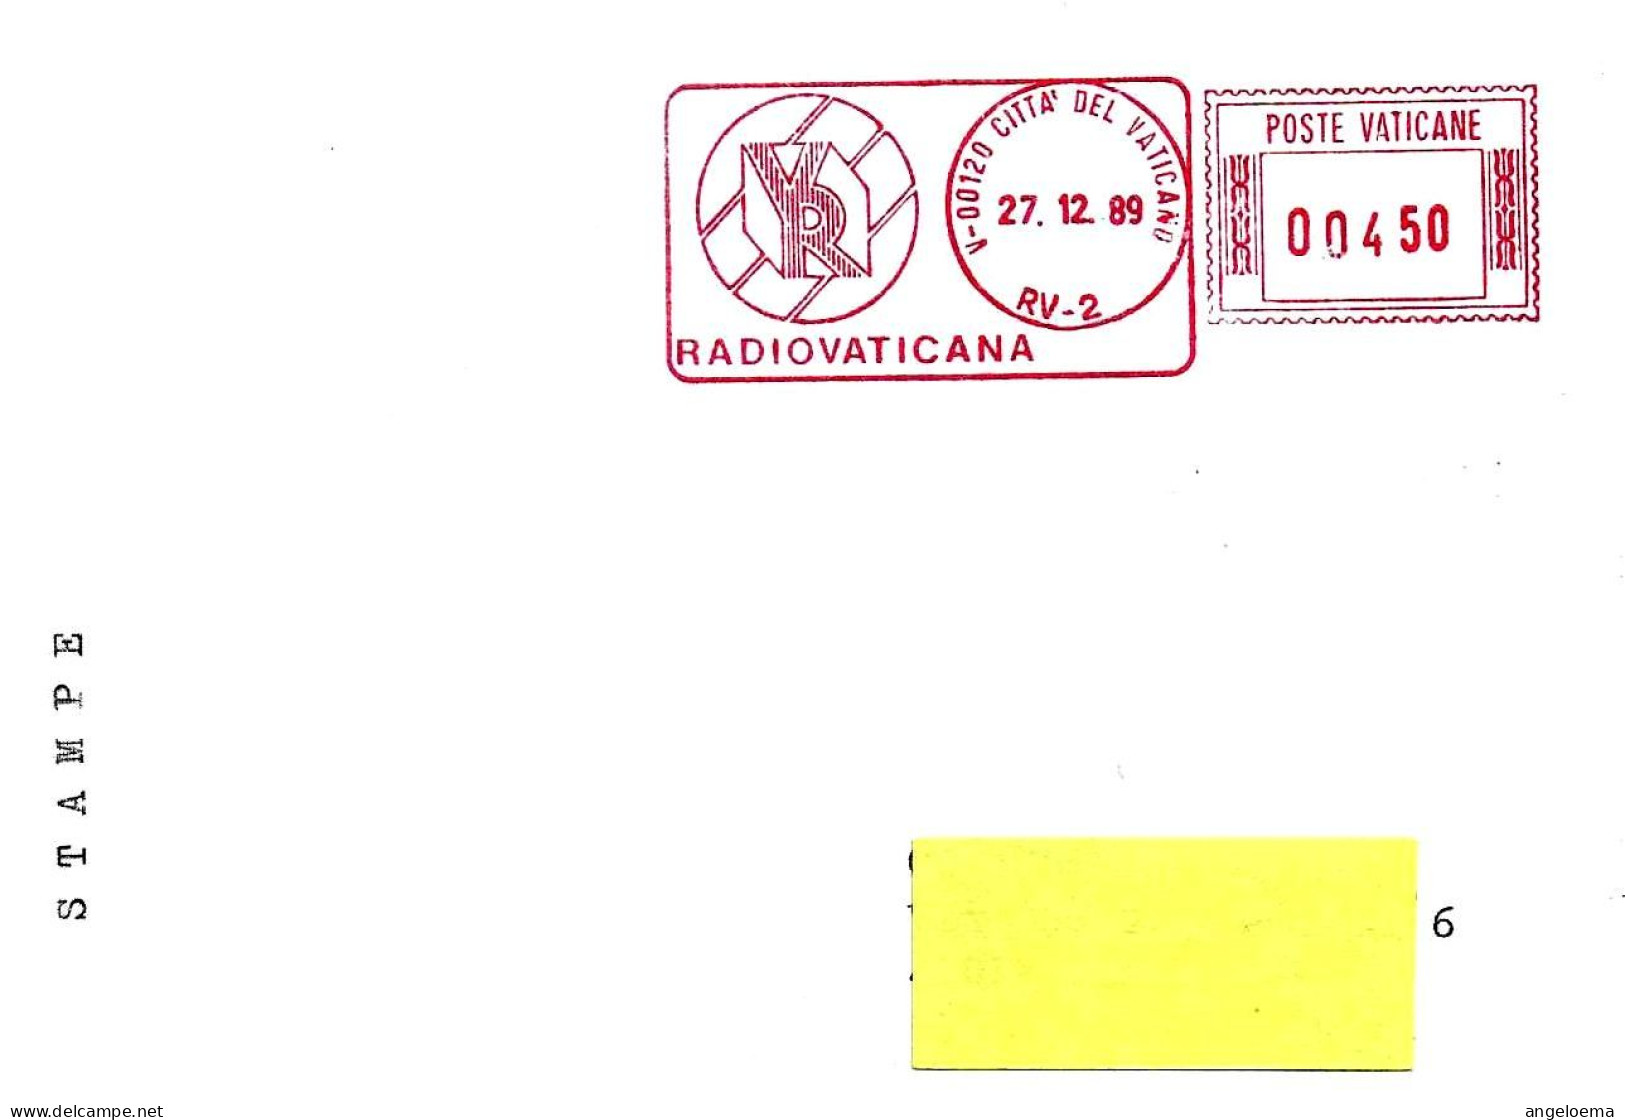 VATICANO - 1989 RADIO VATICANA RV-2 Ema Affrancatura Meccanica Rossa Red Meter Su Busta Viaggiata - 11274 - Machines à Affranchir (EMA)